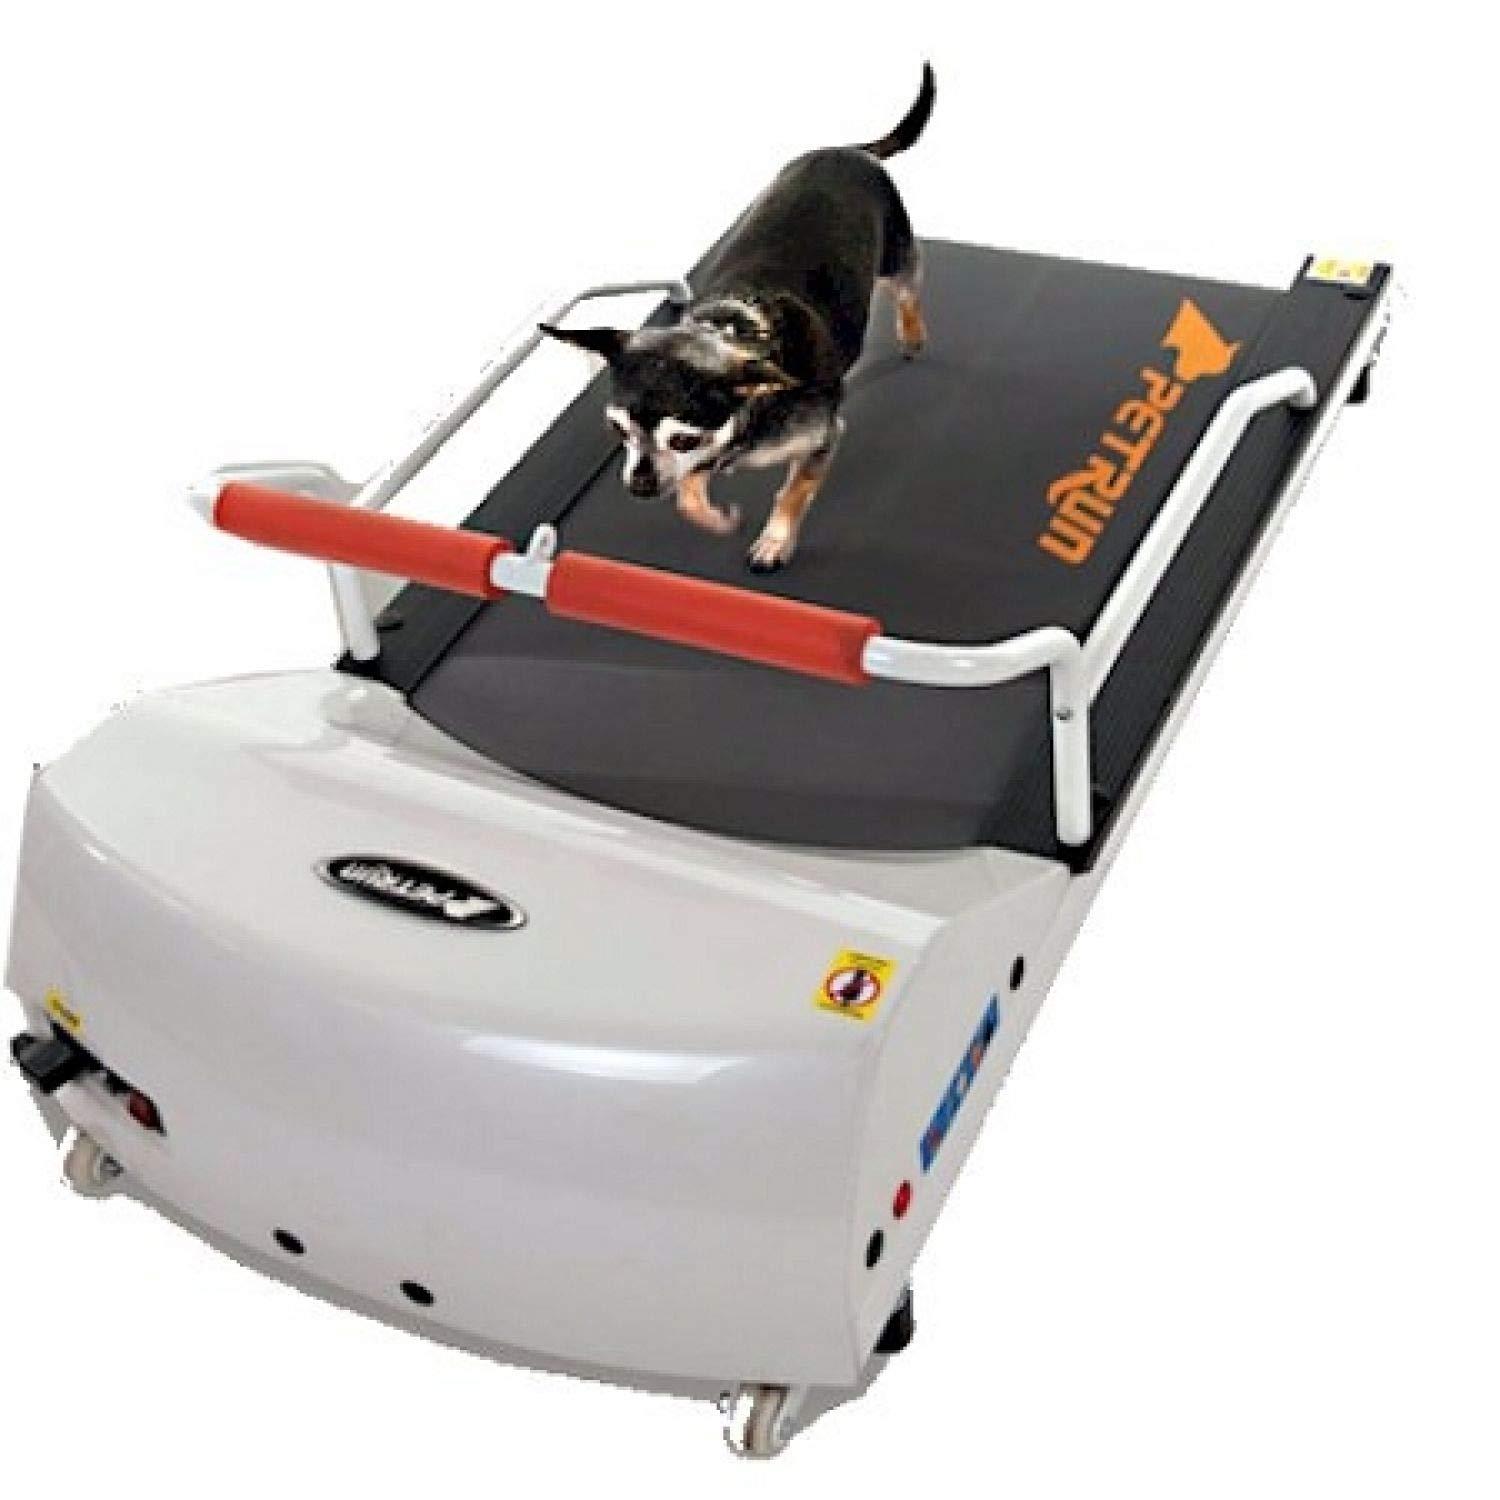 StarSun Depot GoPet PetRun PR700 Dog Treadmill